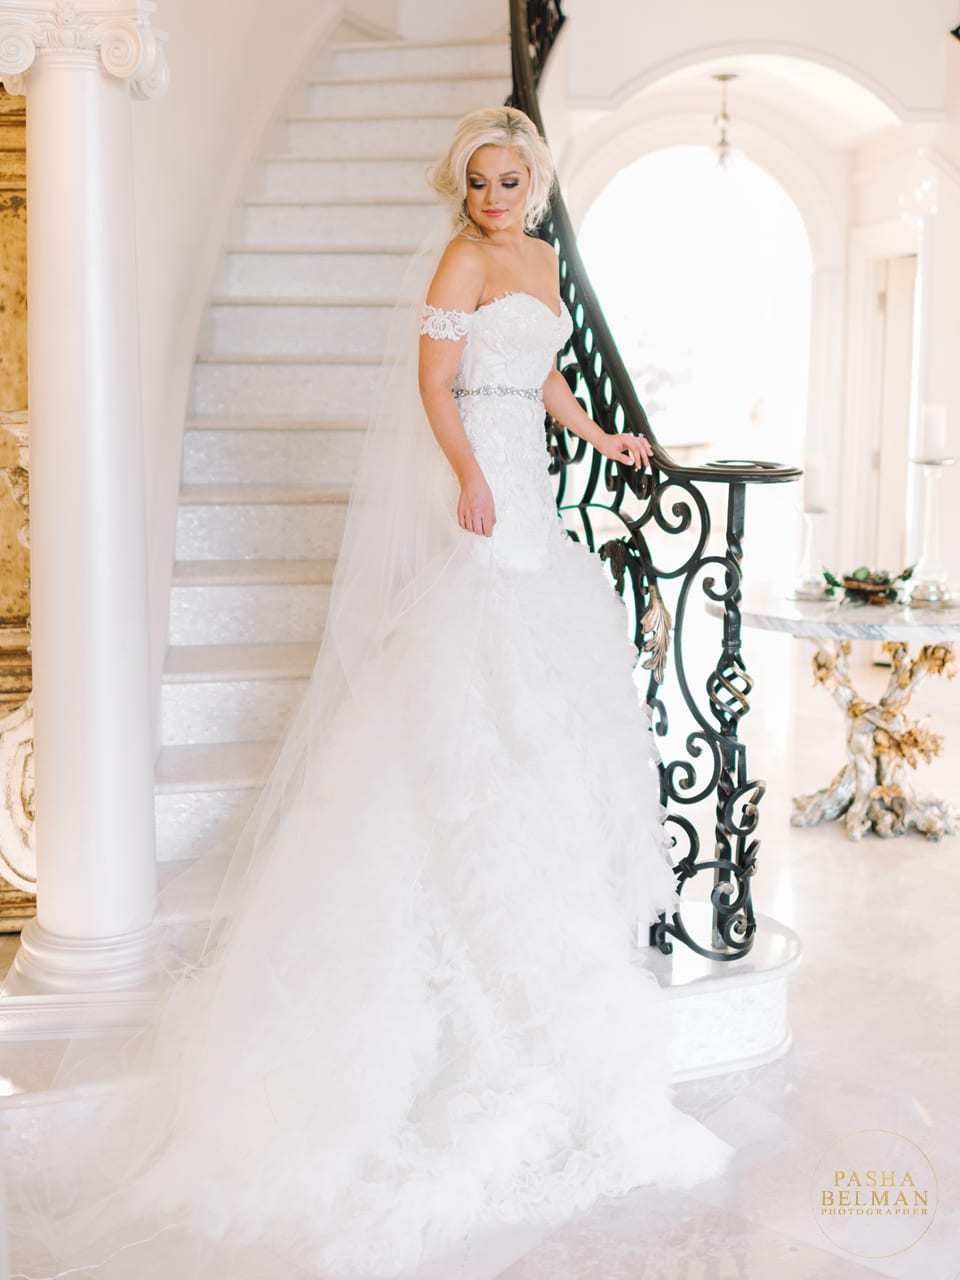 Myrtle Beach Bridal Portraits - Pasha Belman Photography - Top Charleston Wedding Photographer